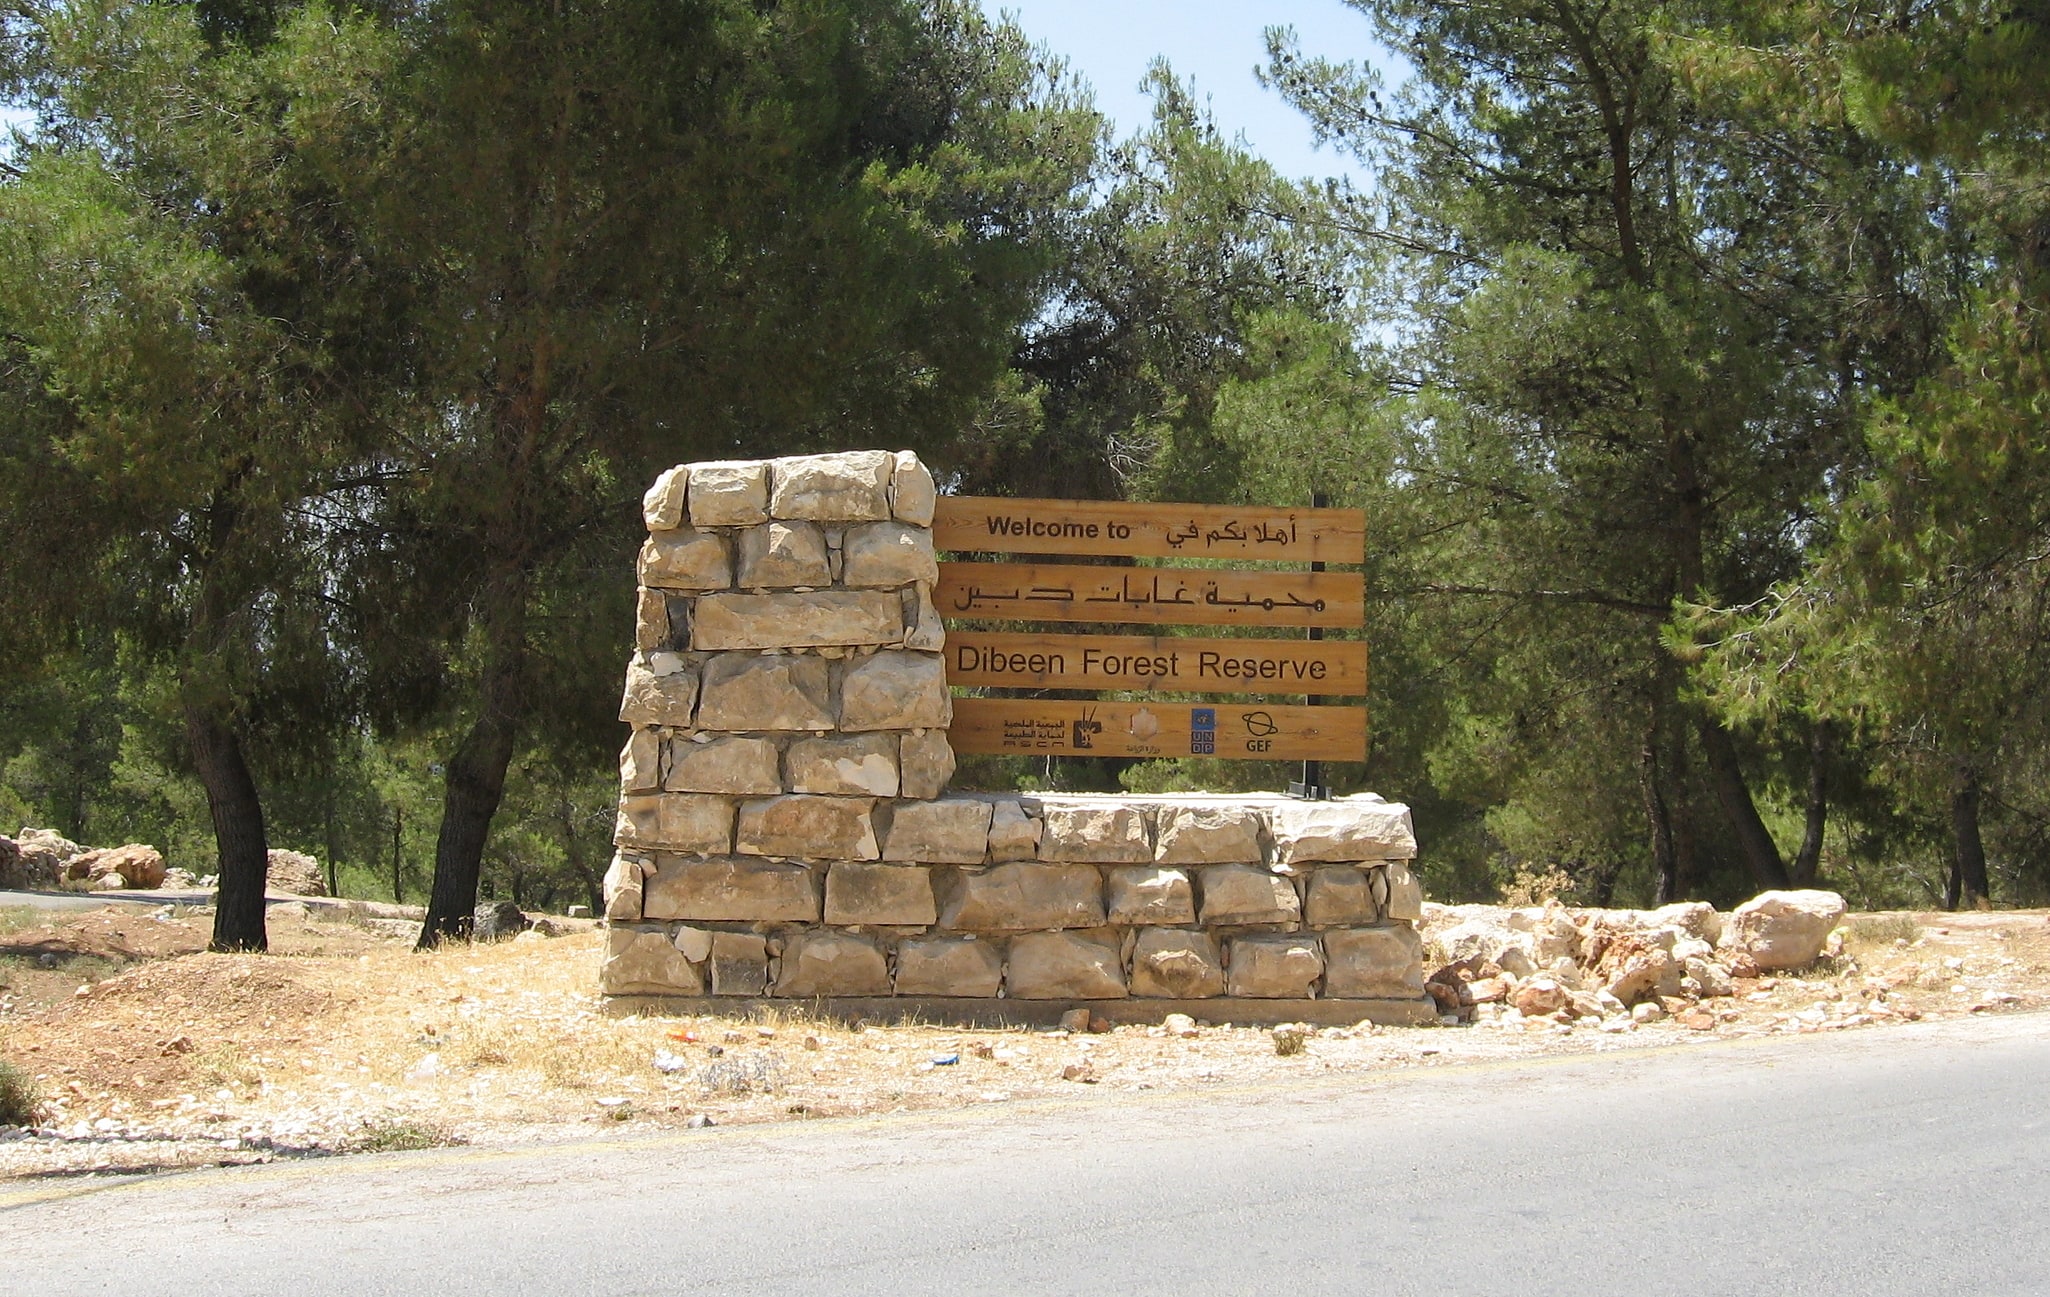 Dibbeen Forest Reserve, Jordania